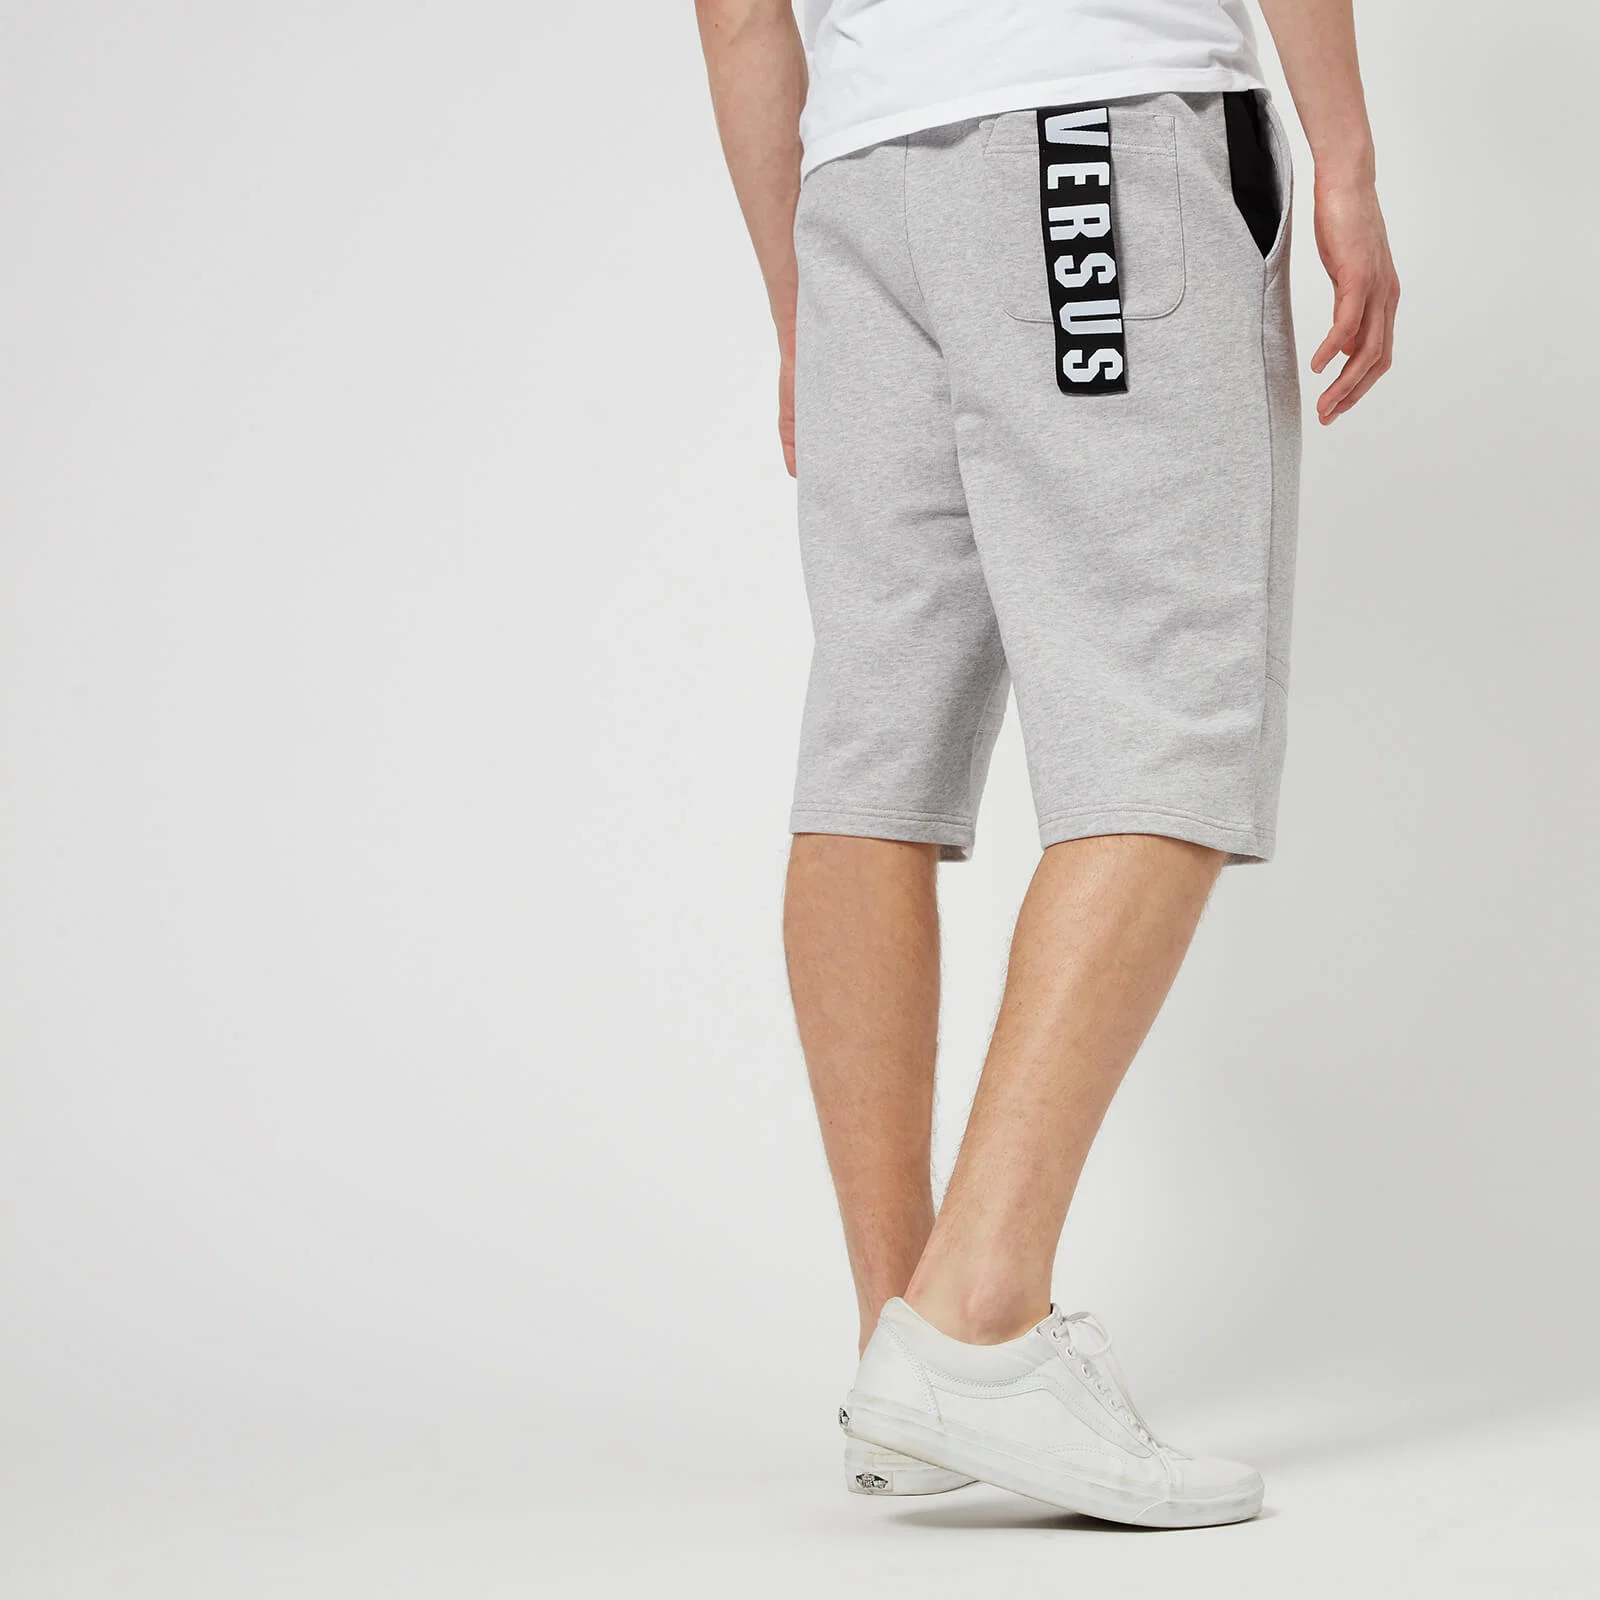 Versus Versace Men's Pocket Logo Sweat Shorts - Grey/Black Image 1